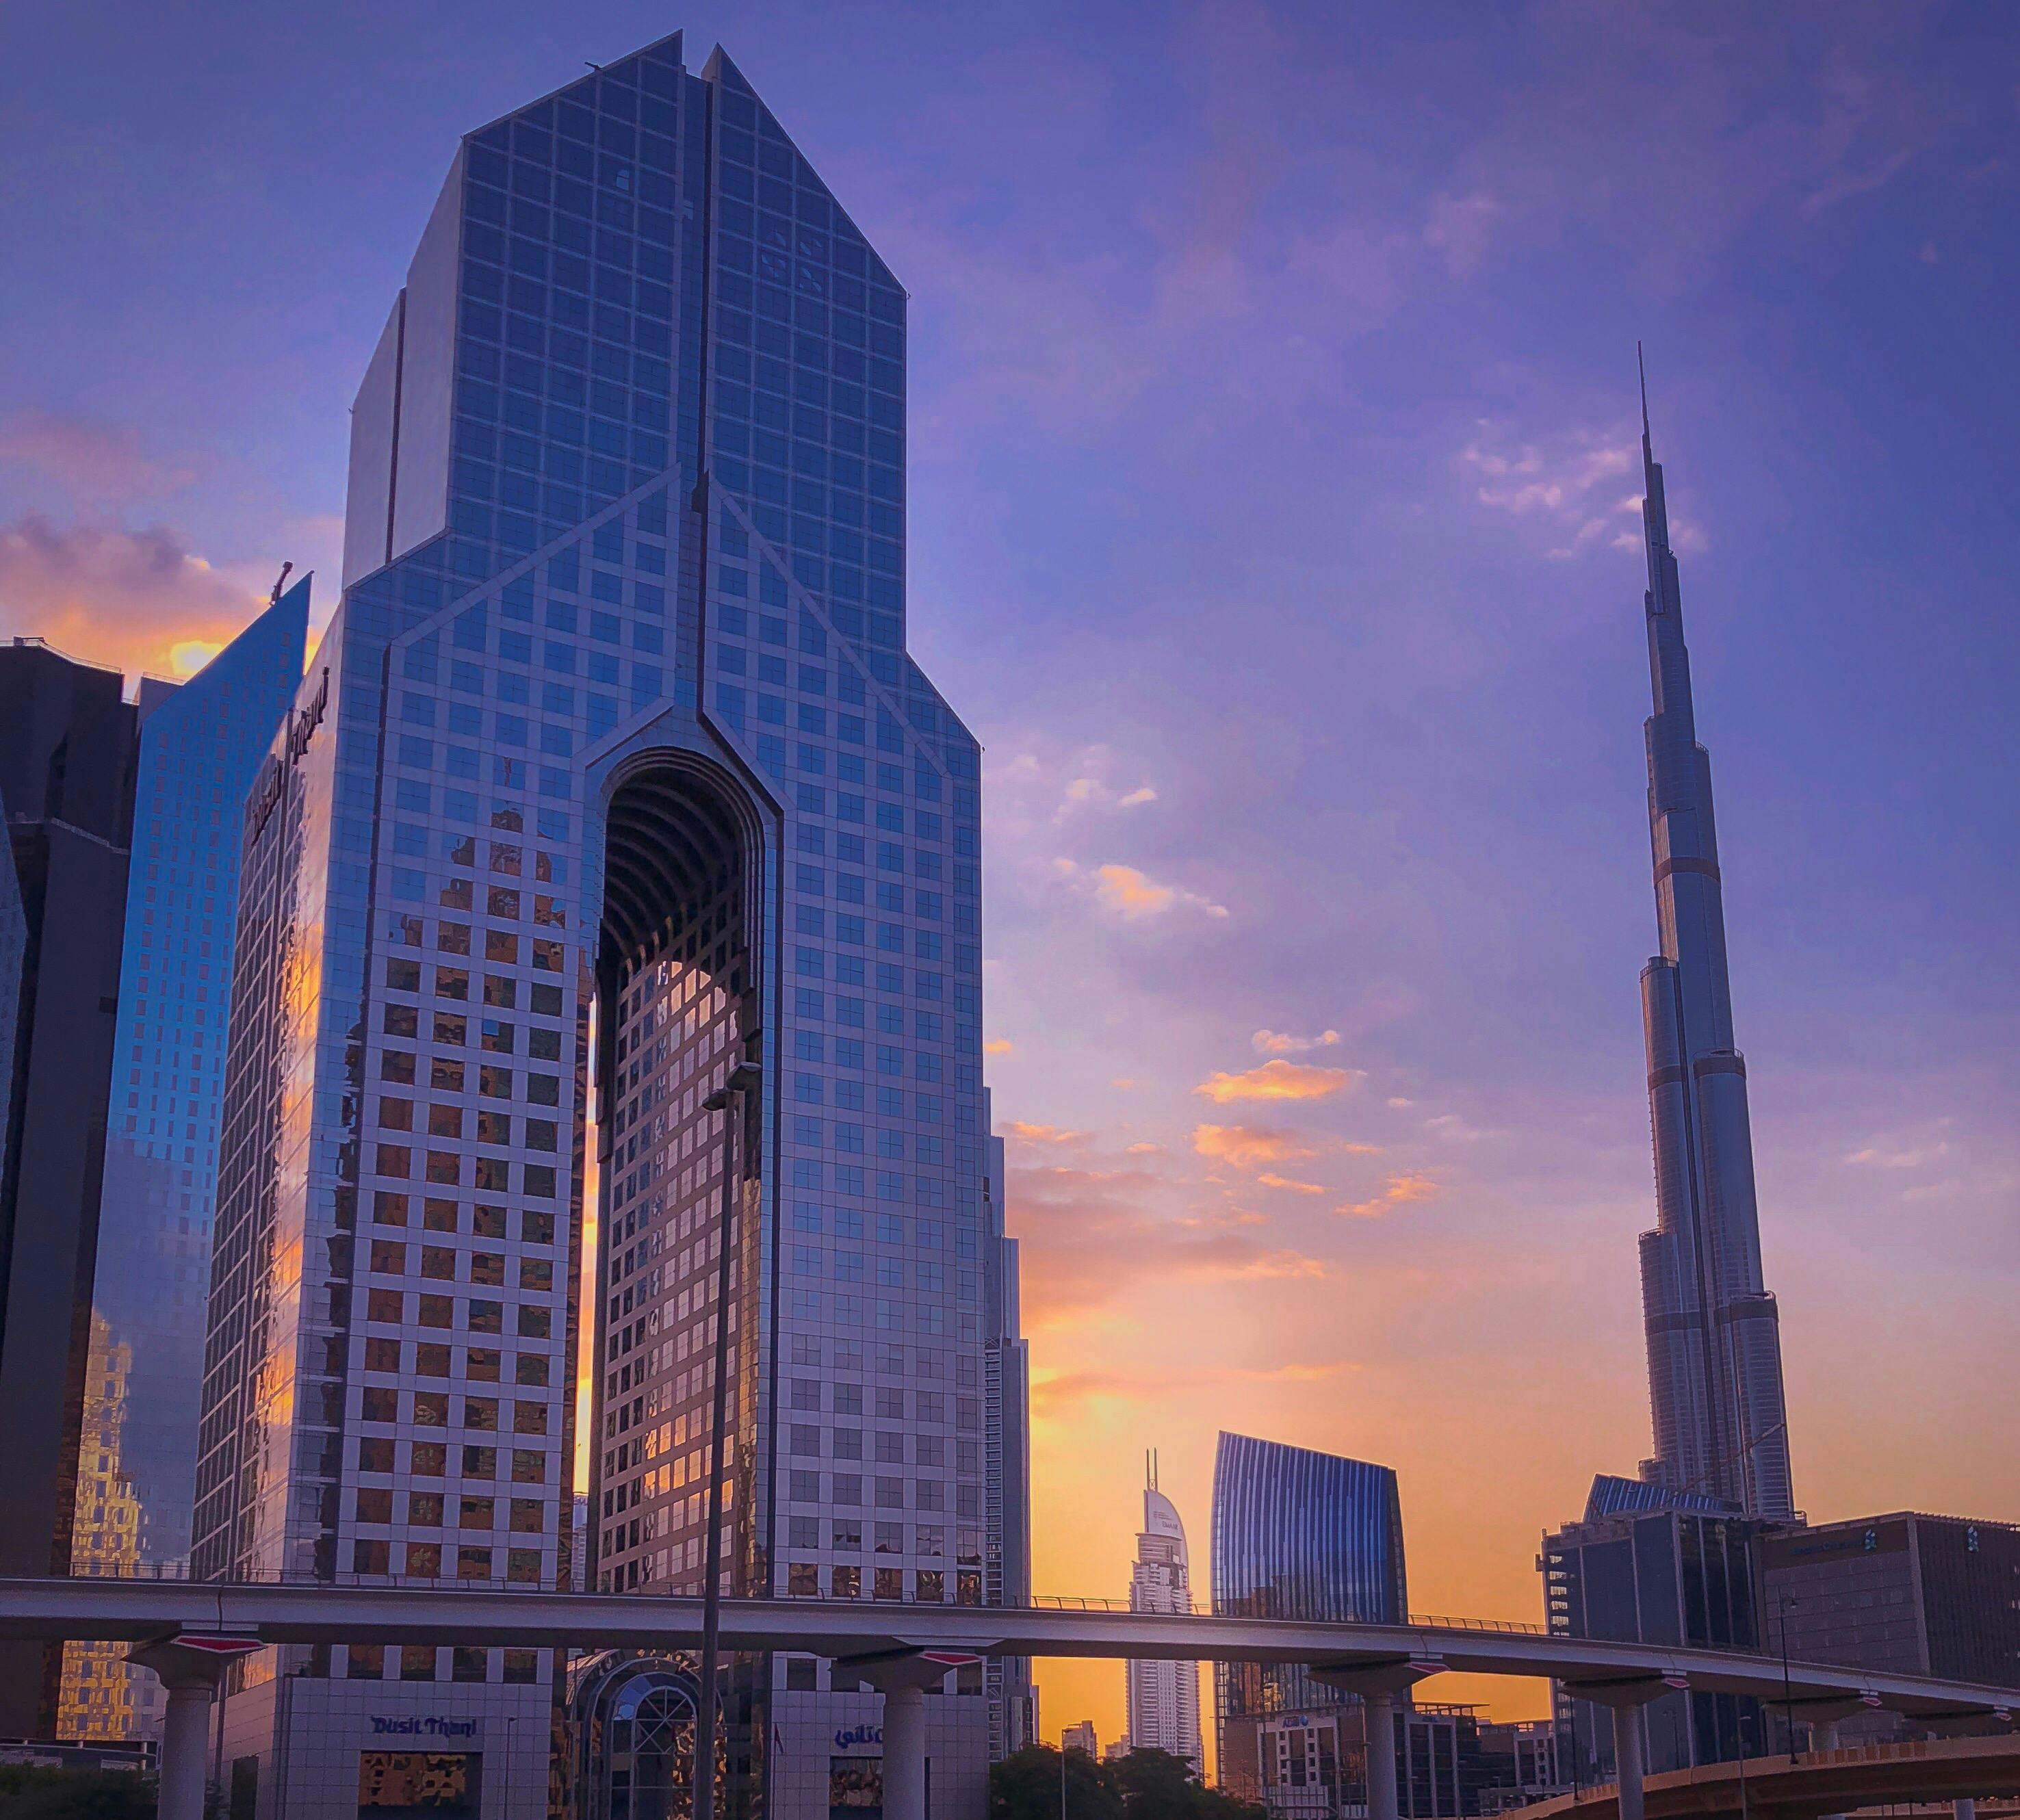 Free Stock Photo Of Burj Khalifa Dubai Dubai City